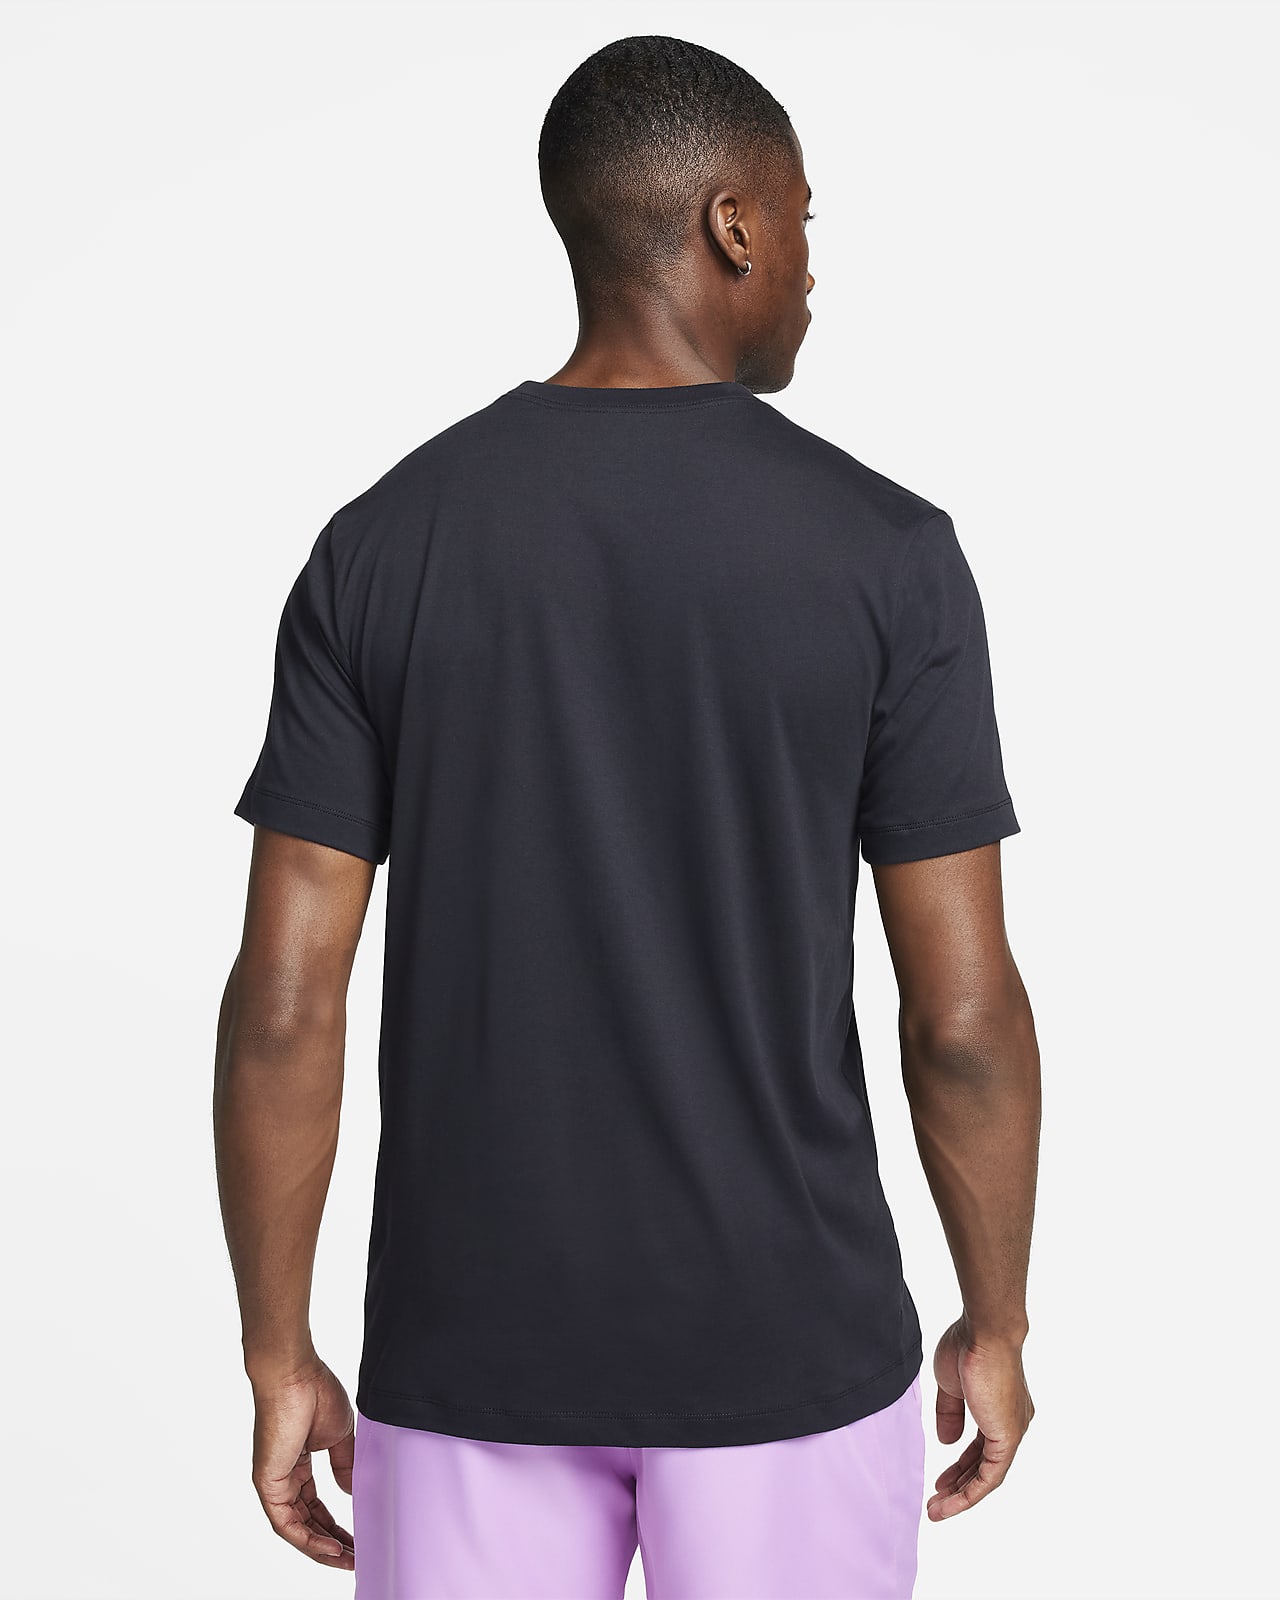 LU Nike Dri-FIT Herren-Tennis-T-Shirt. NikeCourt